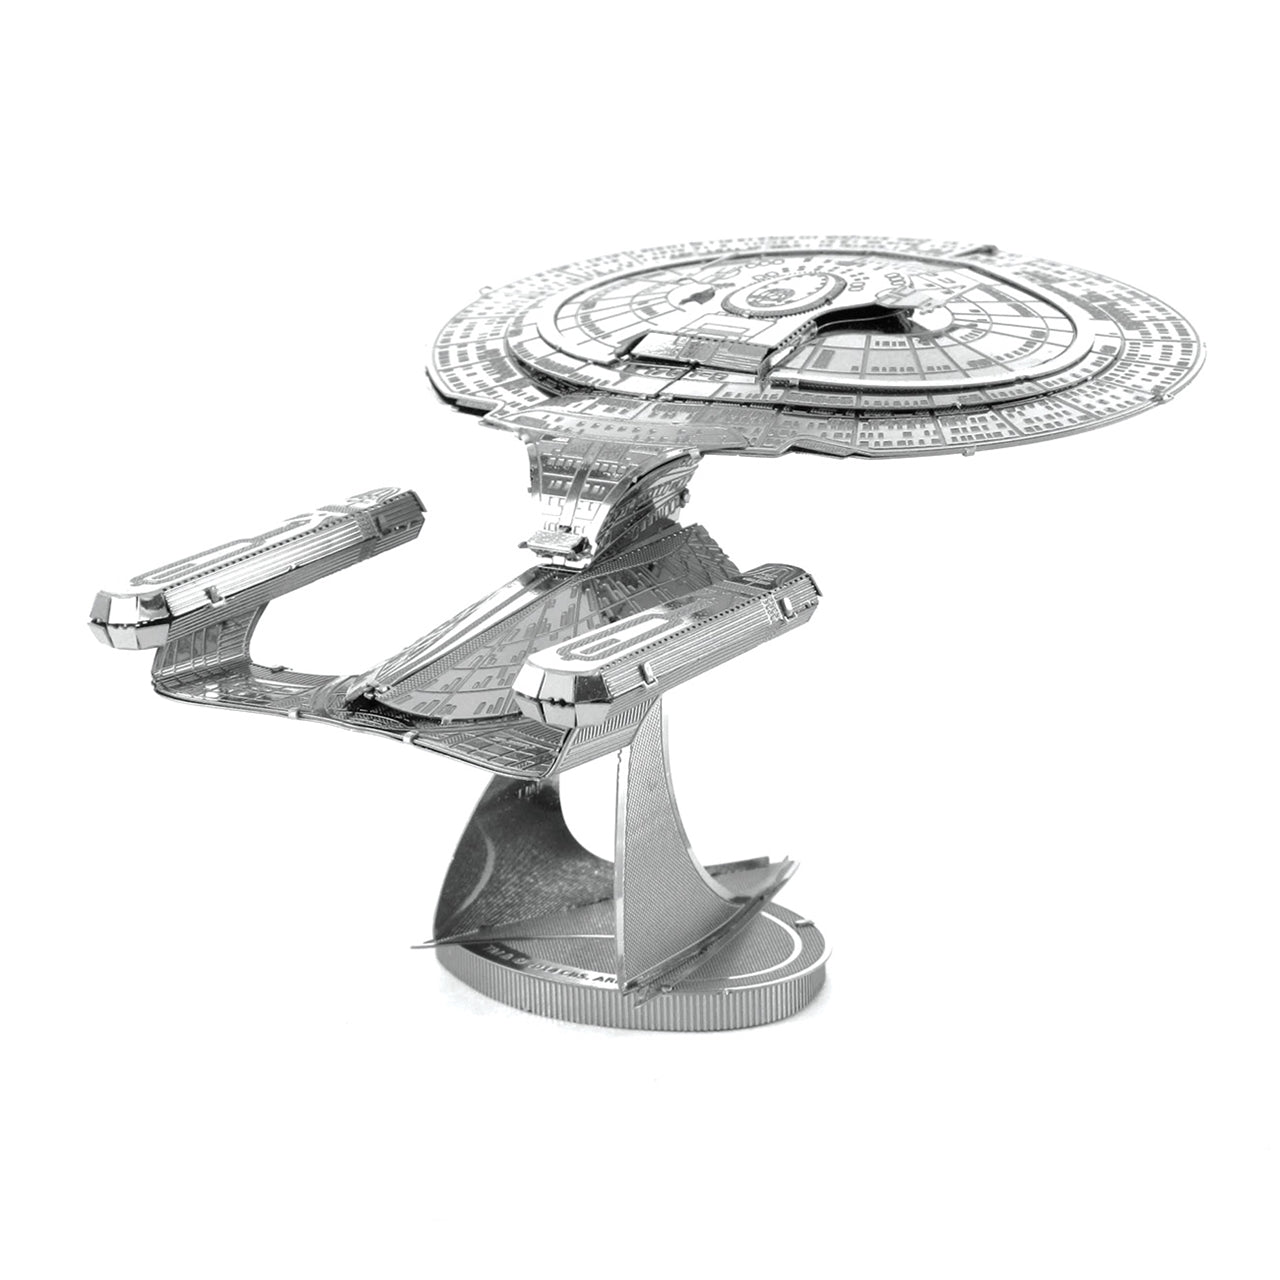 Metal Earth - Star Trek: USS Enterprise NCC-1701-D Model Kit